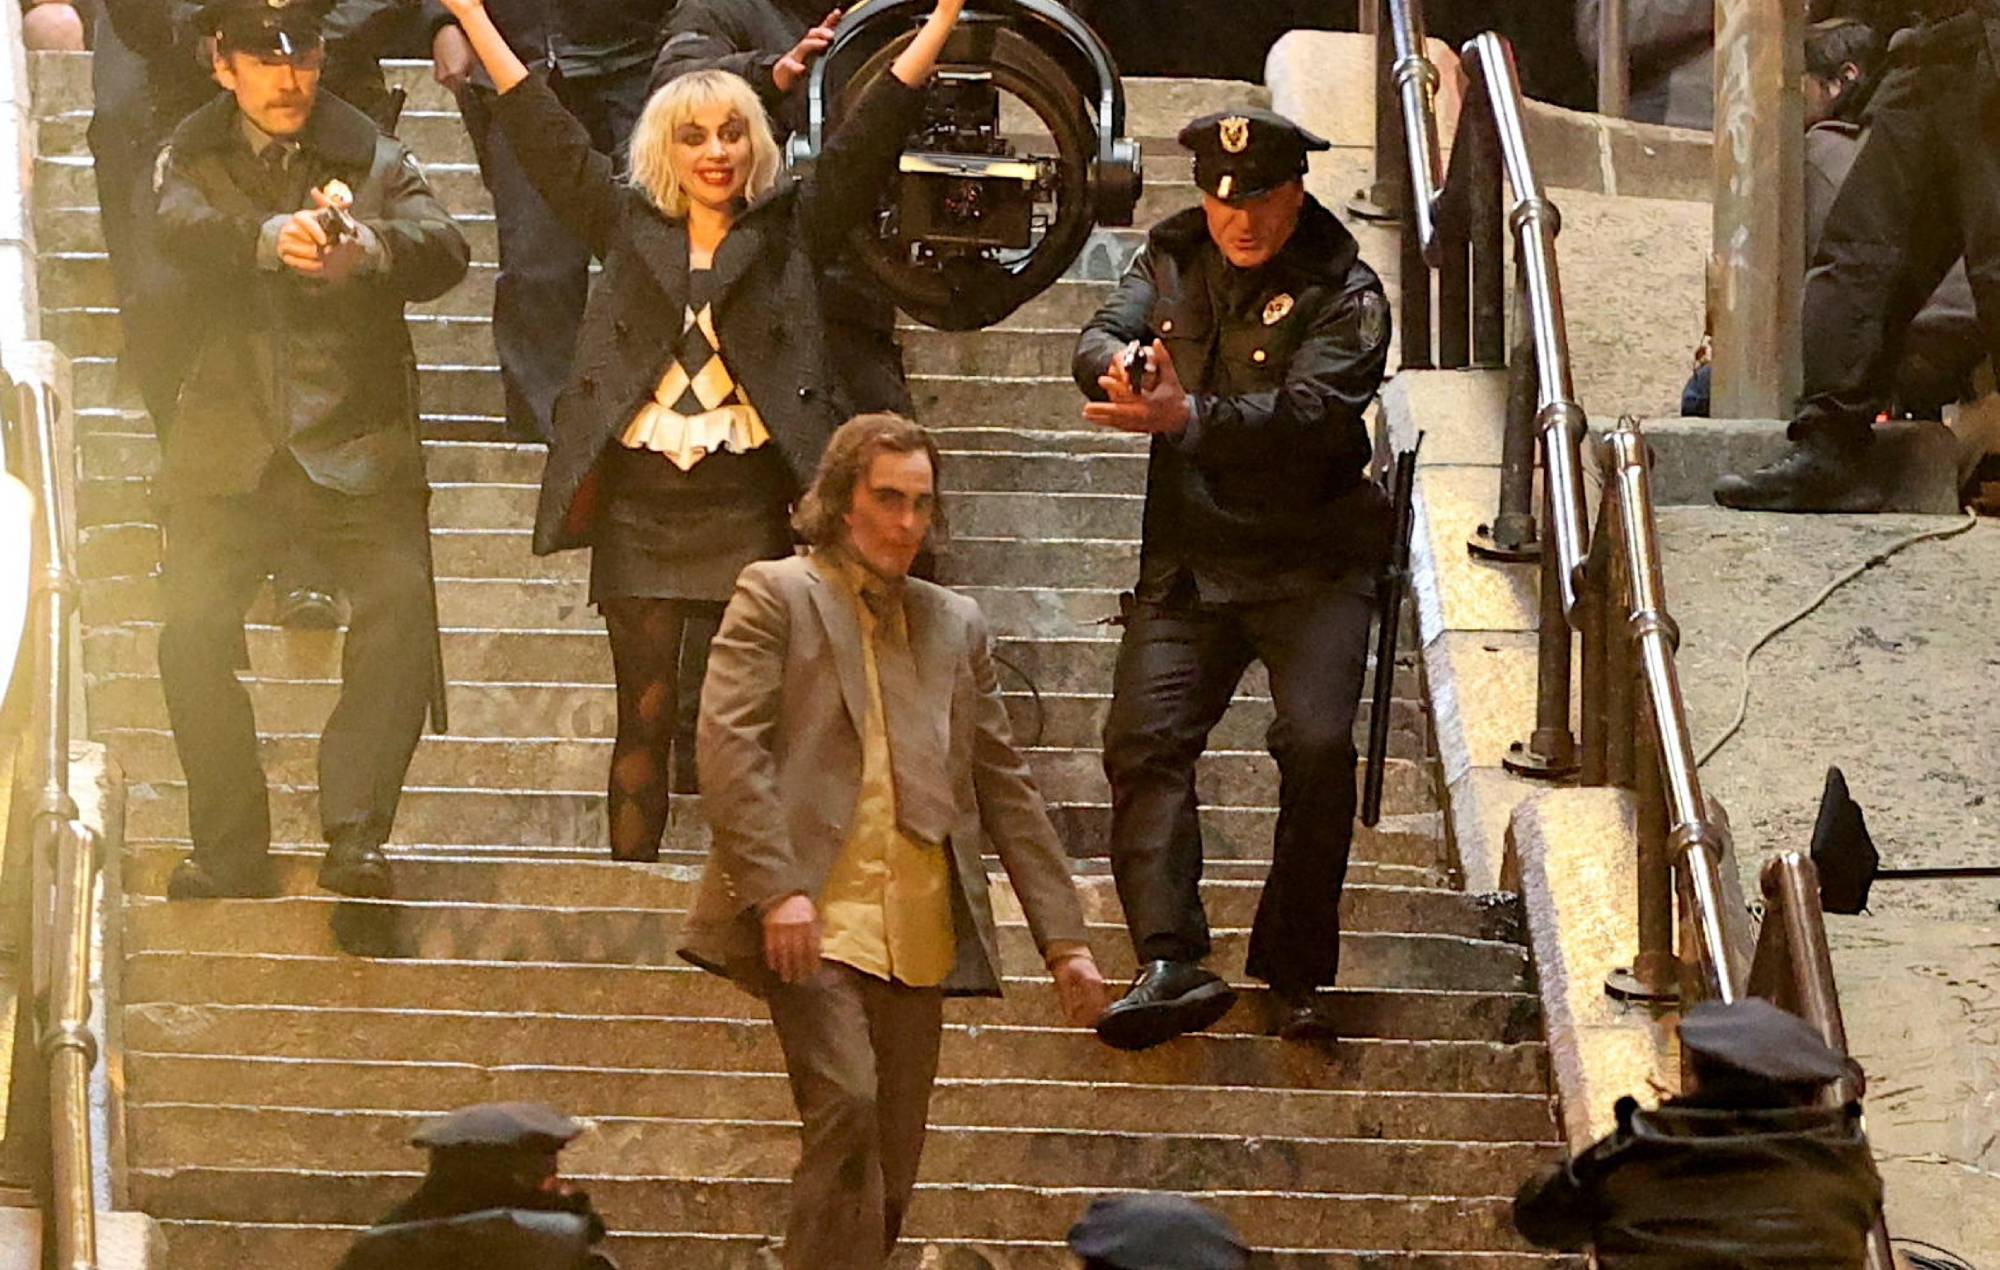 Joker 2 Lady Gaga And Joaquin Phoenix New Set Video Leaked 0734